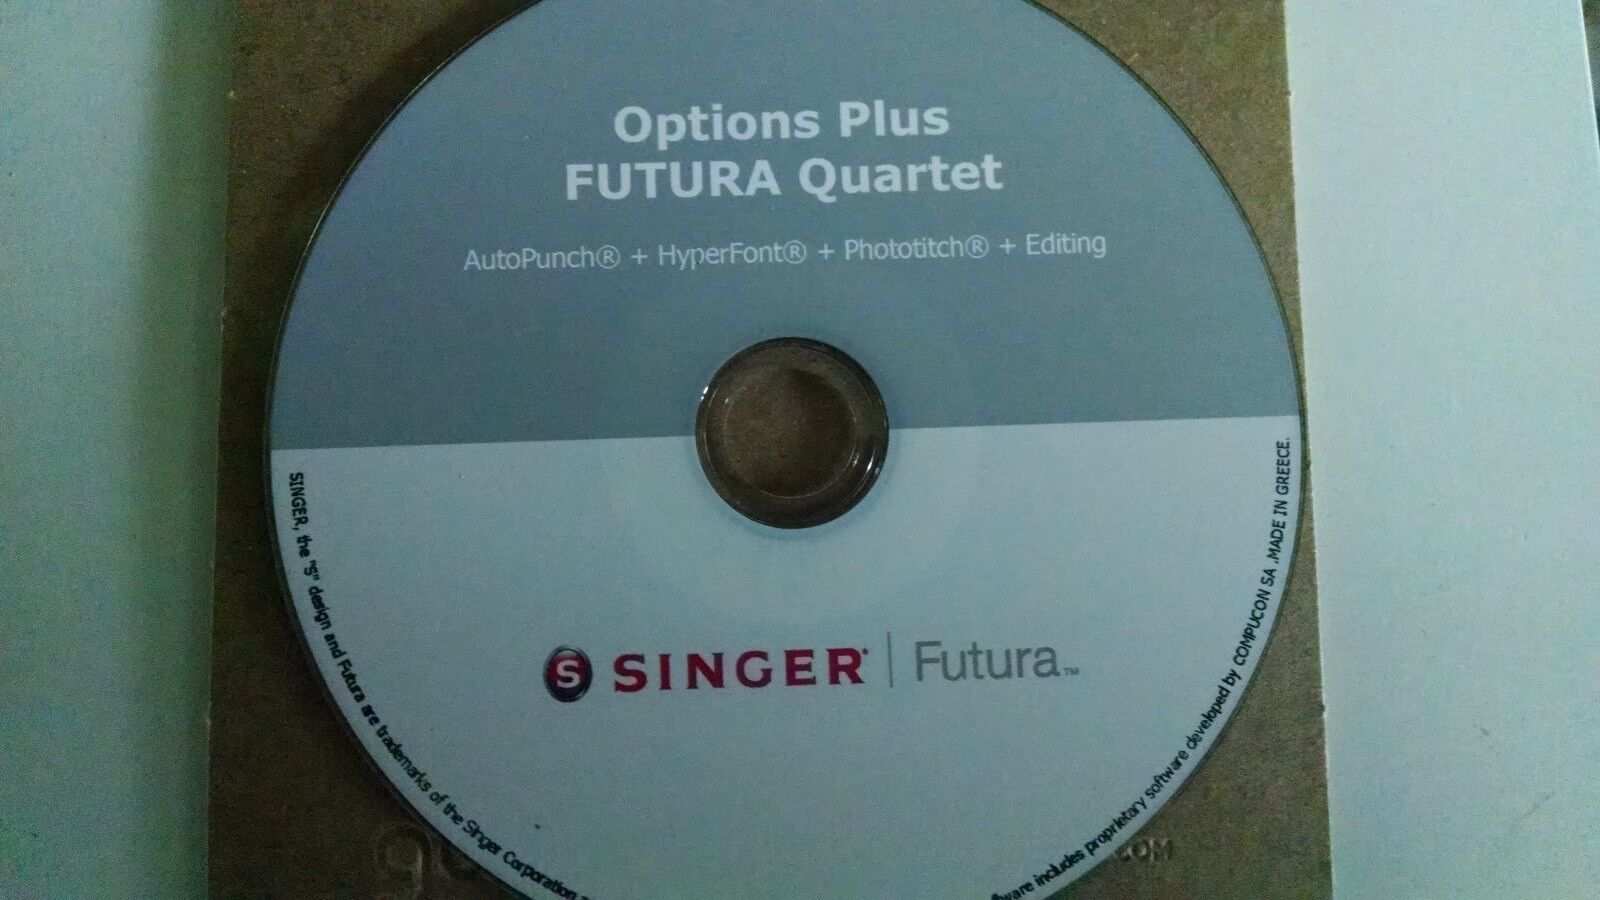 Singer Futura XL 400,420,500,550 SESQ-AutoPunch, HyperFont,PhotoStitch Editing